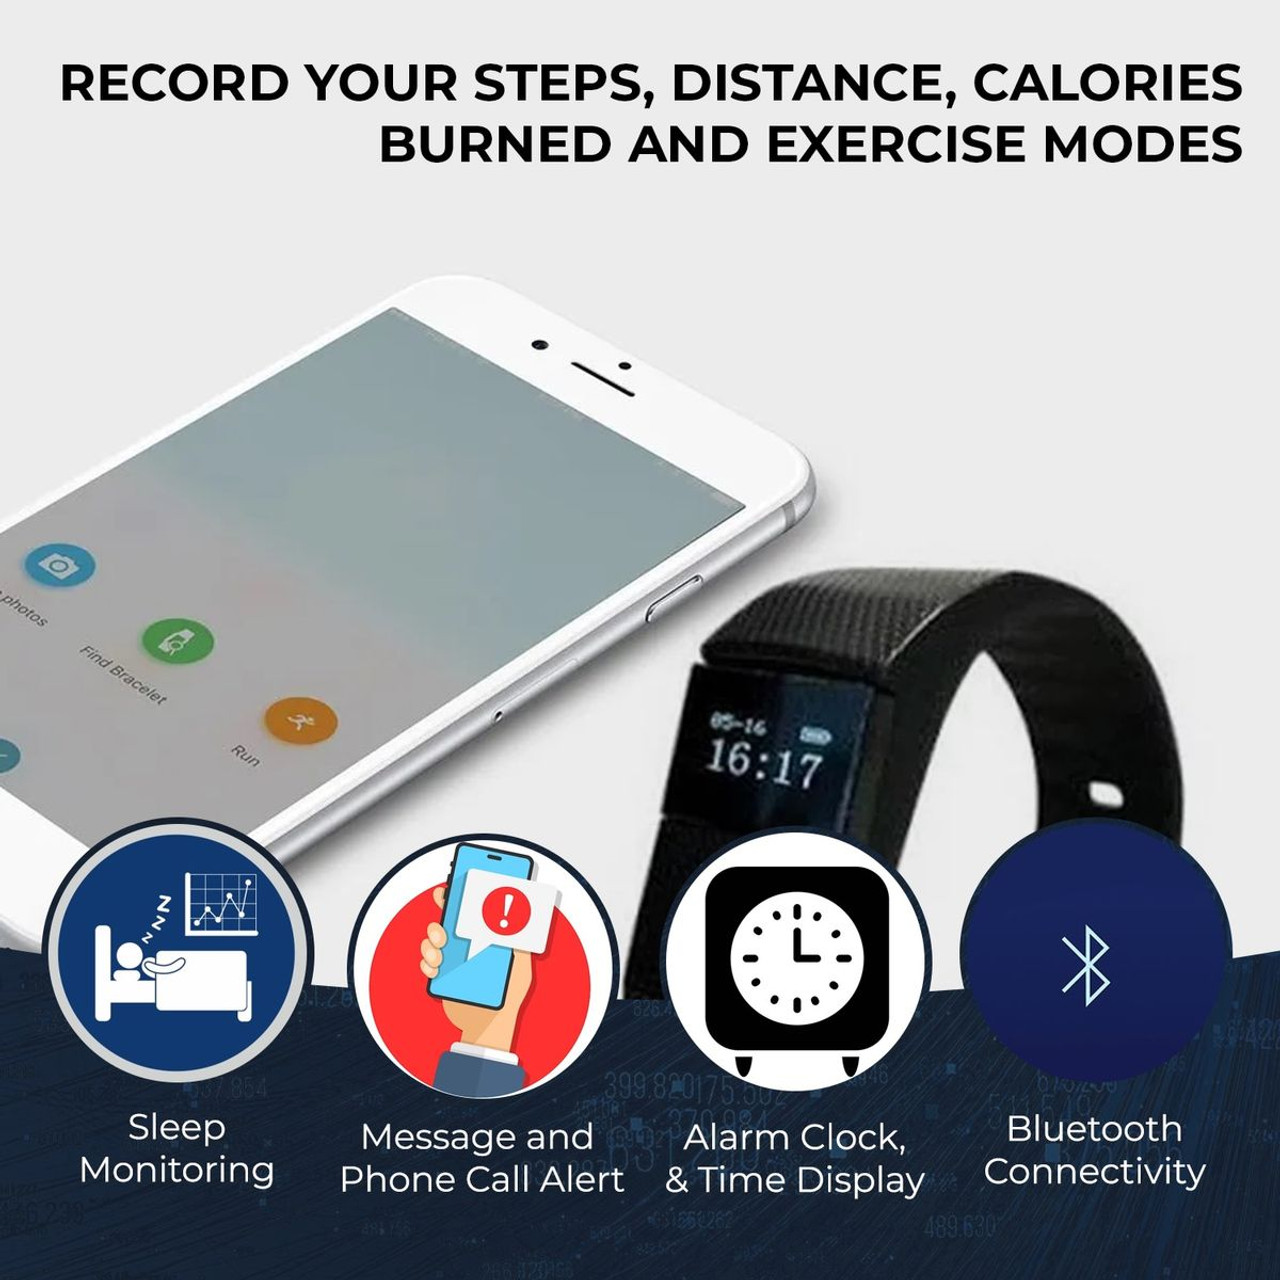 CTTEK Sports Fitness Activity Tracker product image